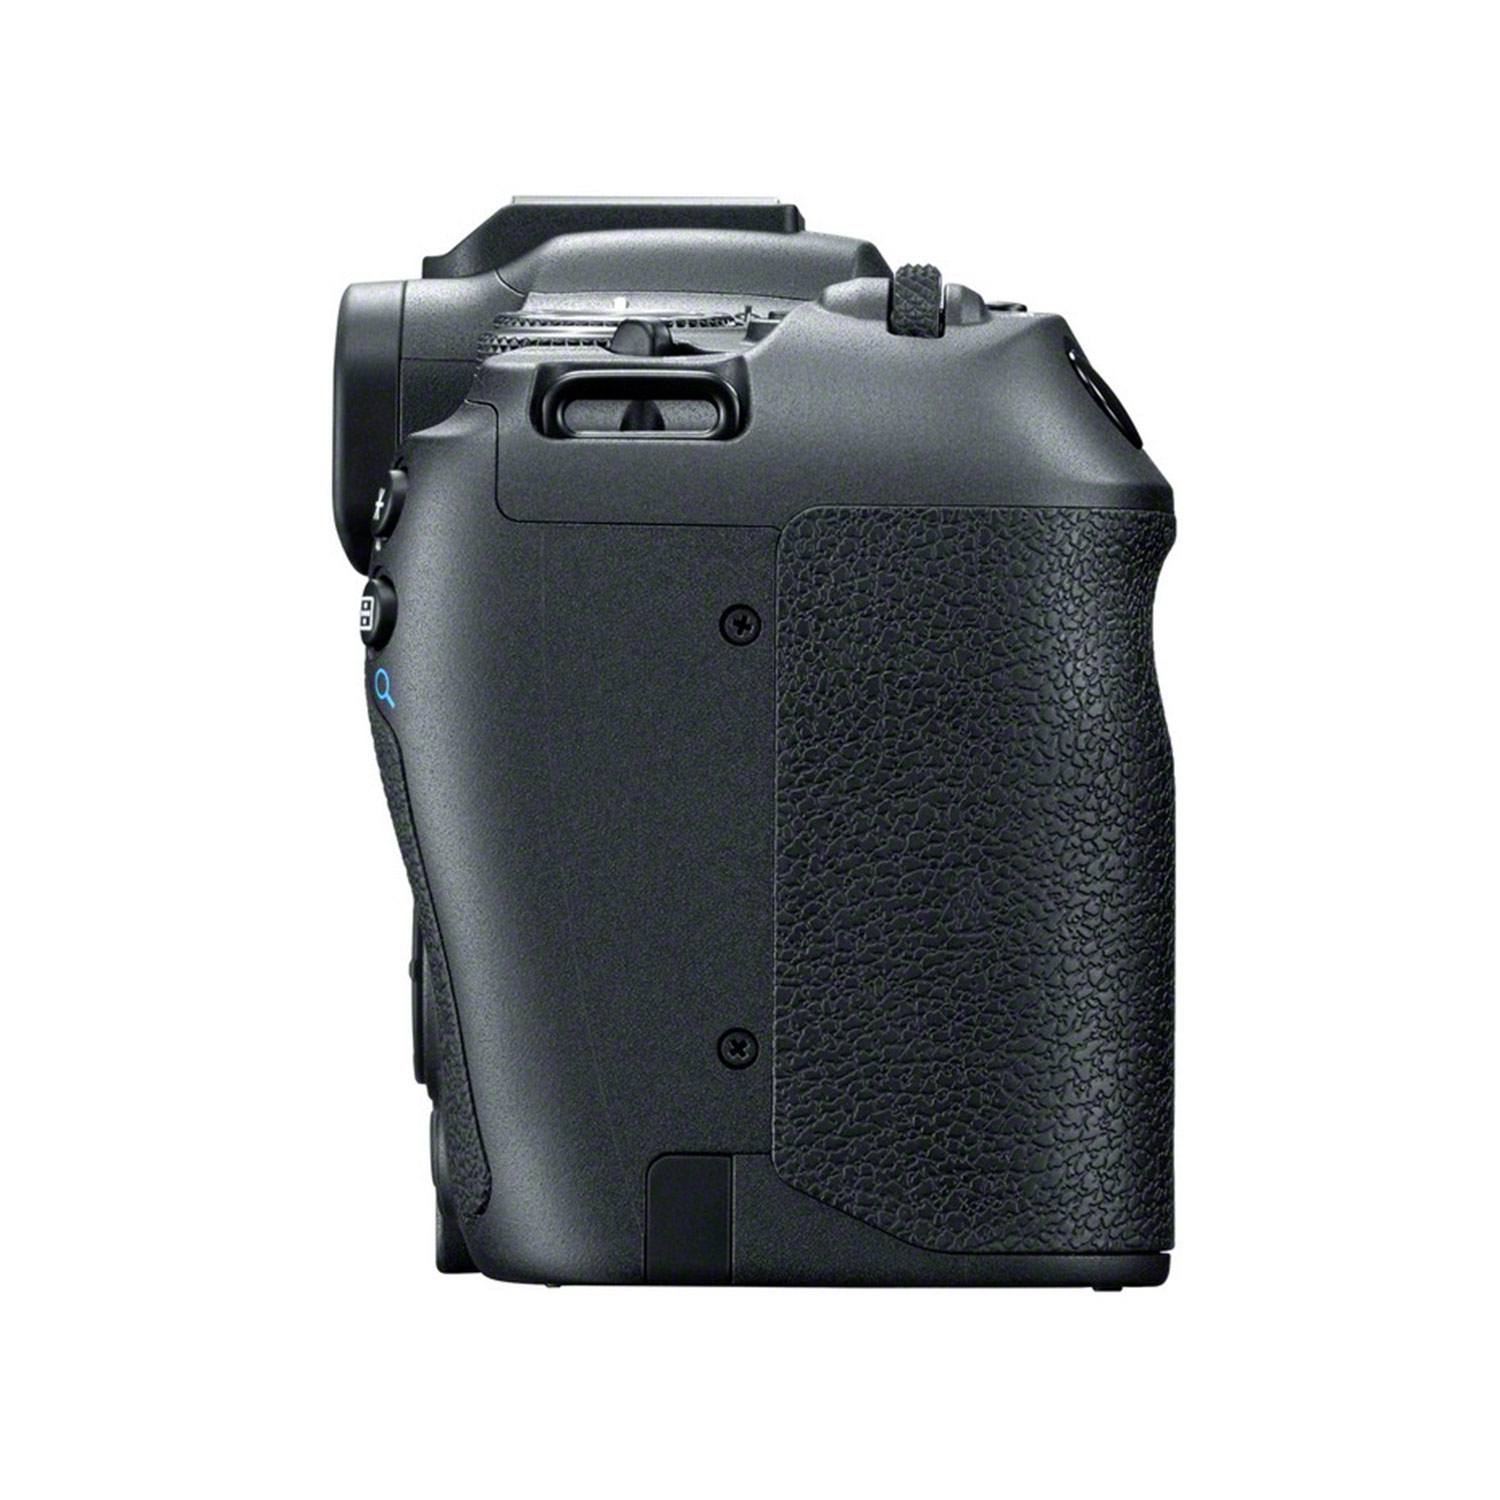 Canon EOS R8 + bei Canon IS Nürnberg in 24-50mm STM Fotomax 1:4,5-6,3 RF & ⏩ Berlin